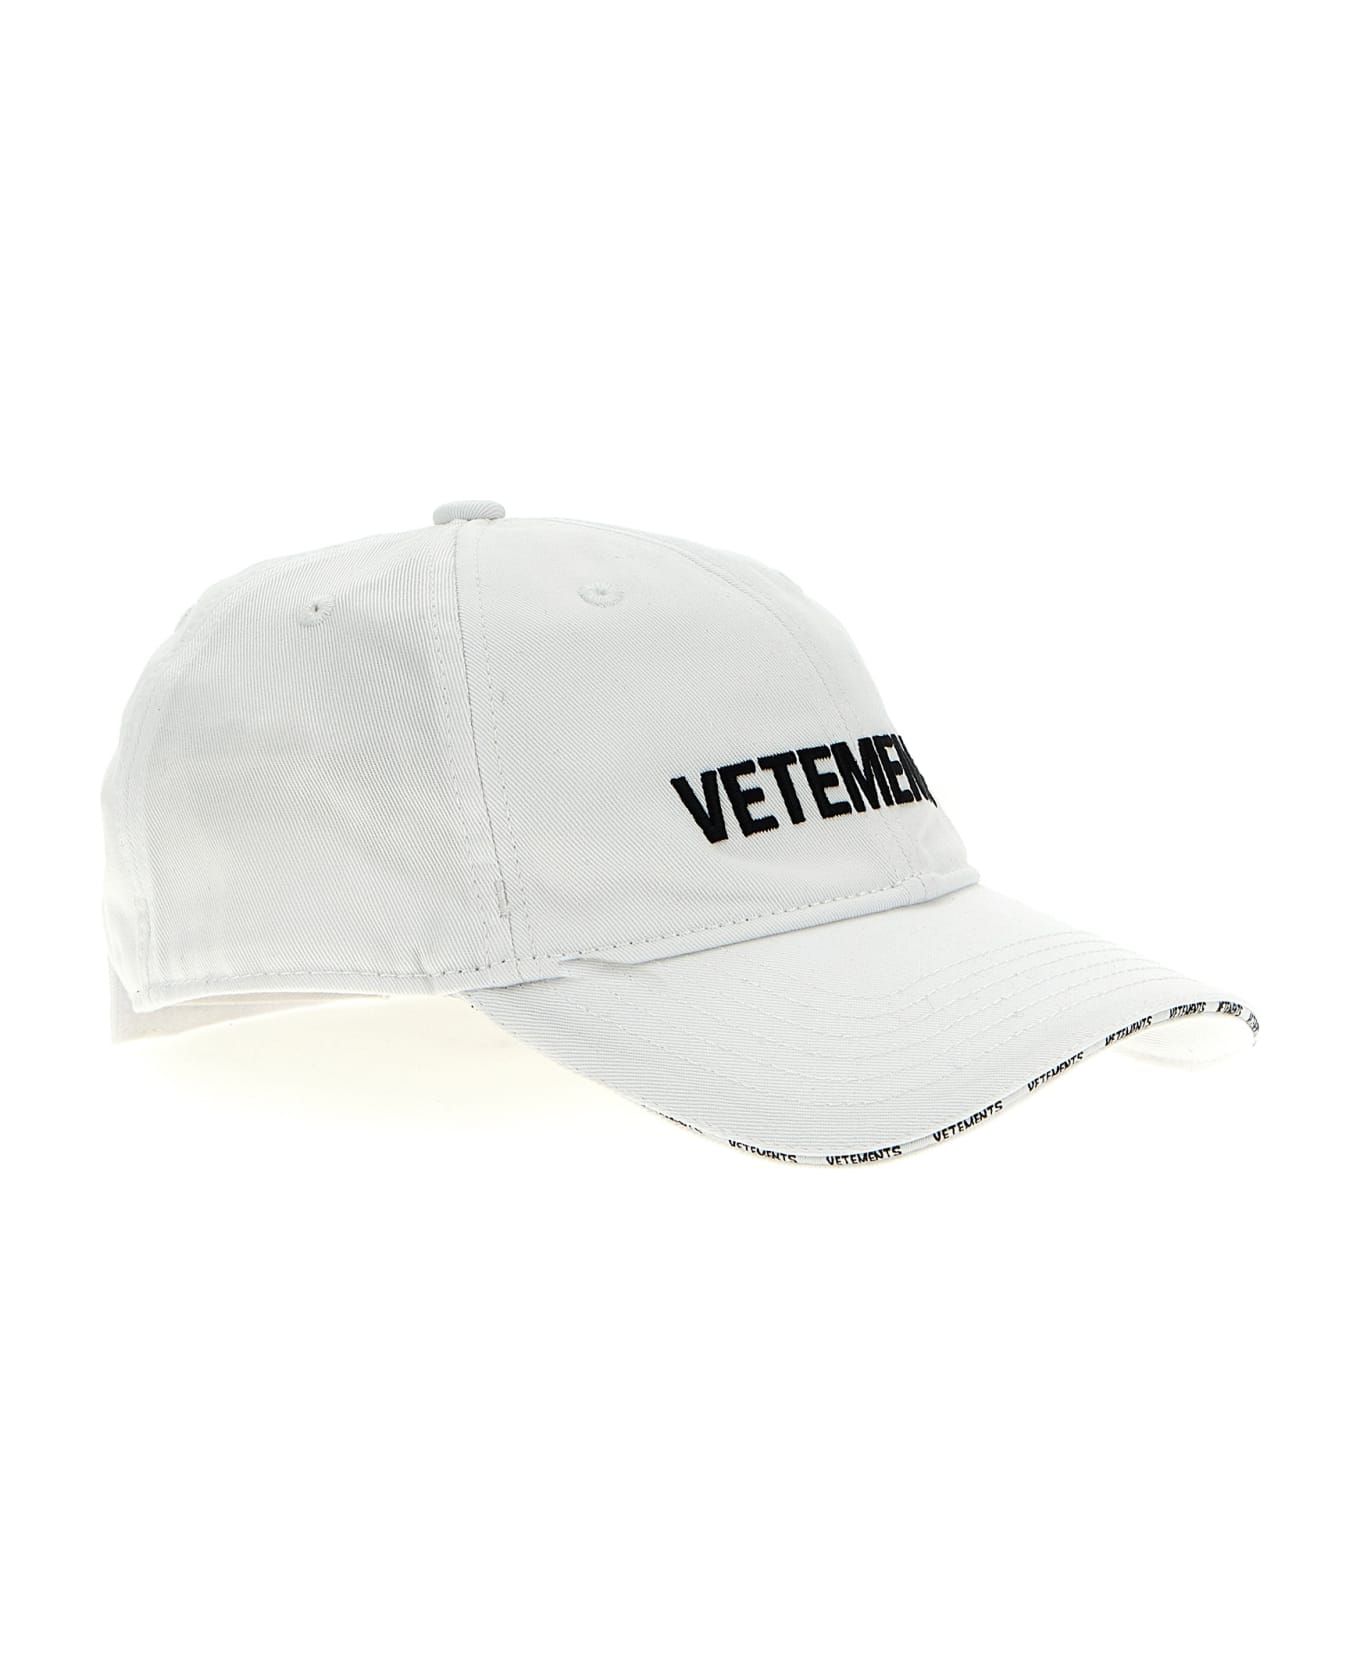 VETEMENTS Logo Cap - White/Black 帽子